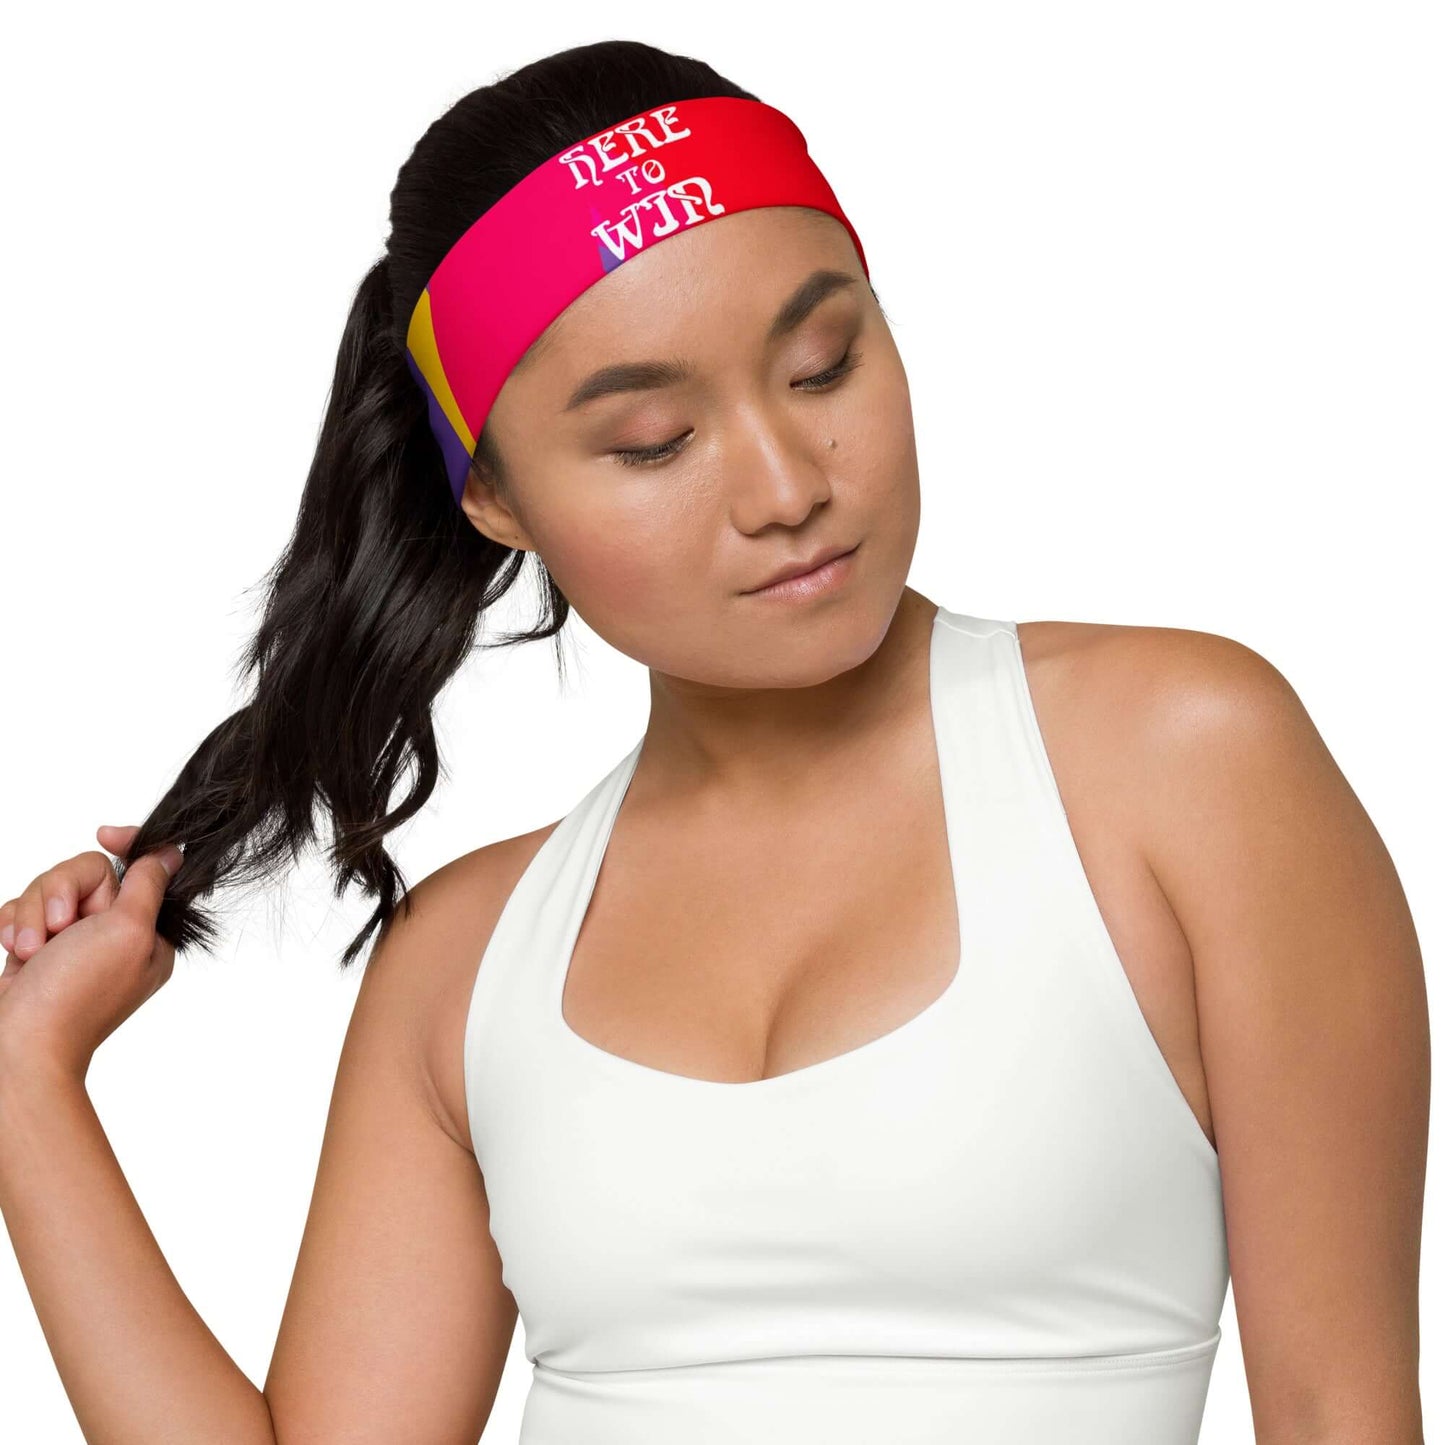 pink-headband-for-washing-face-women